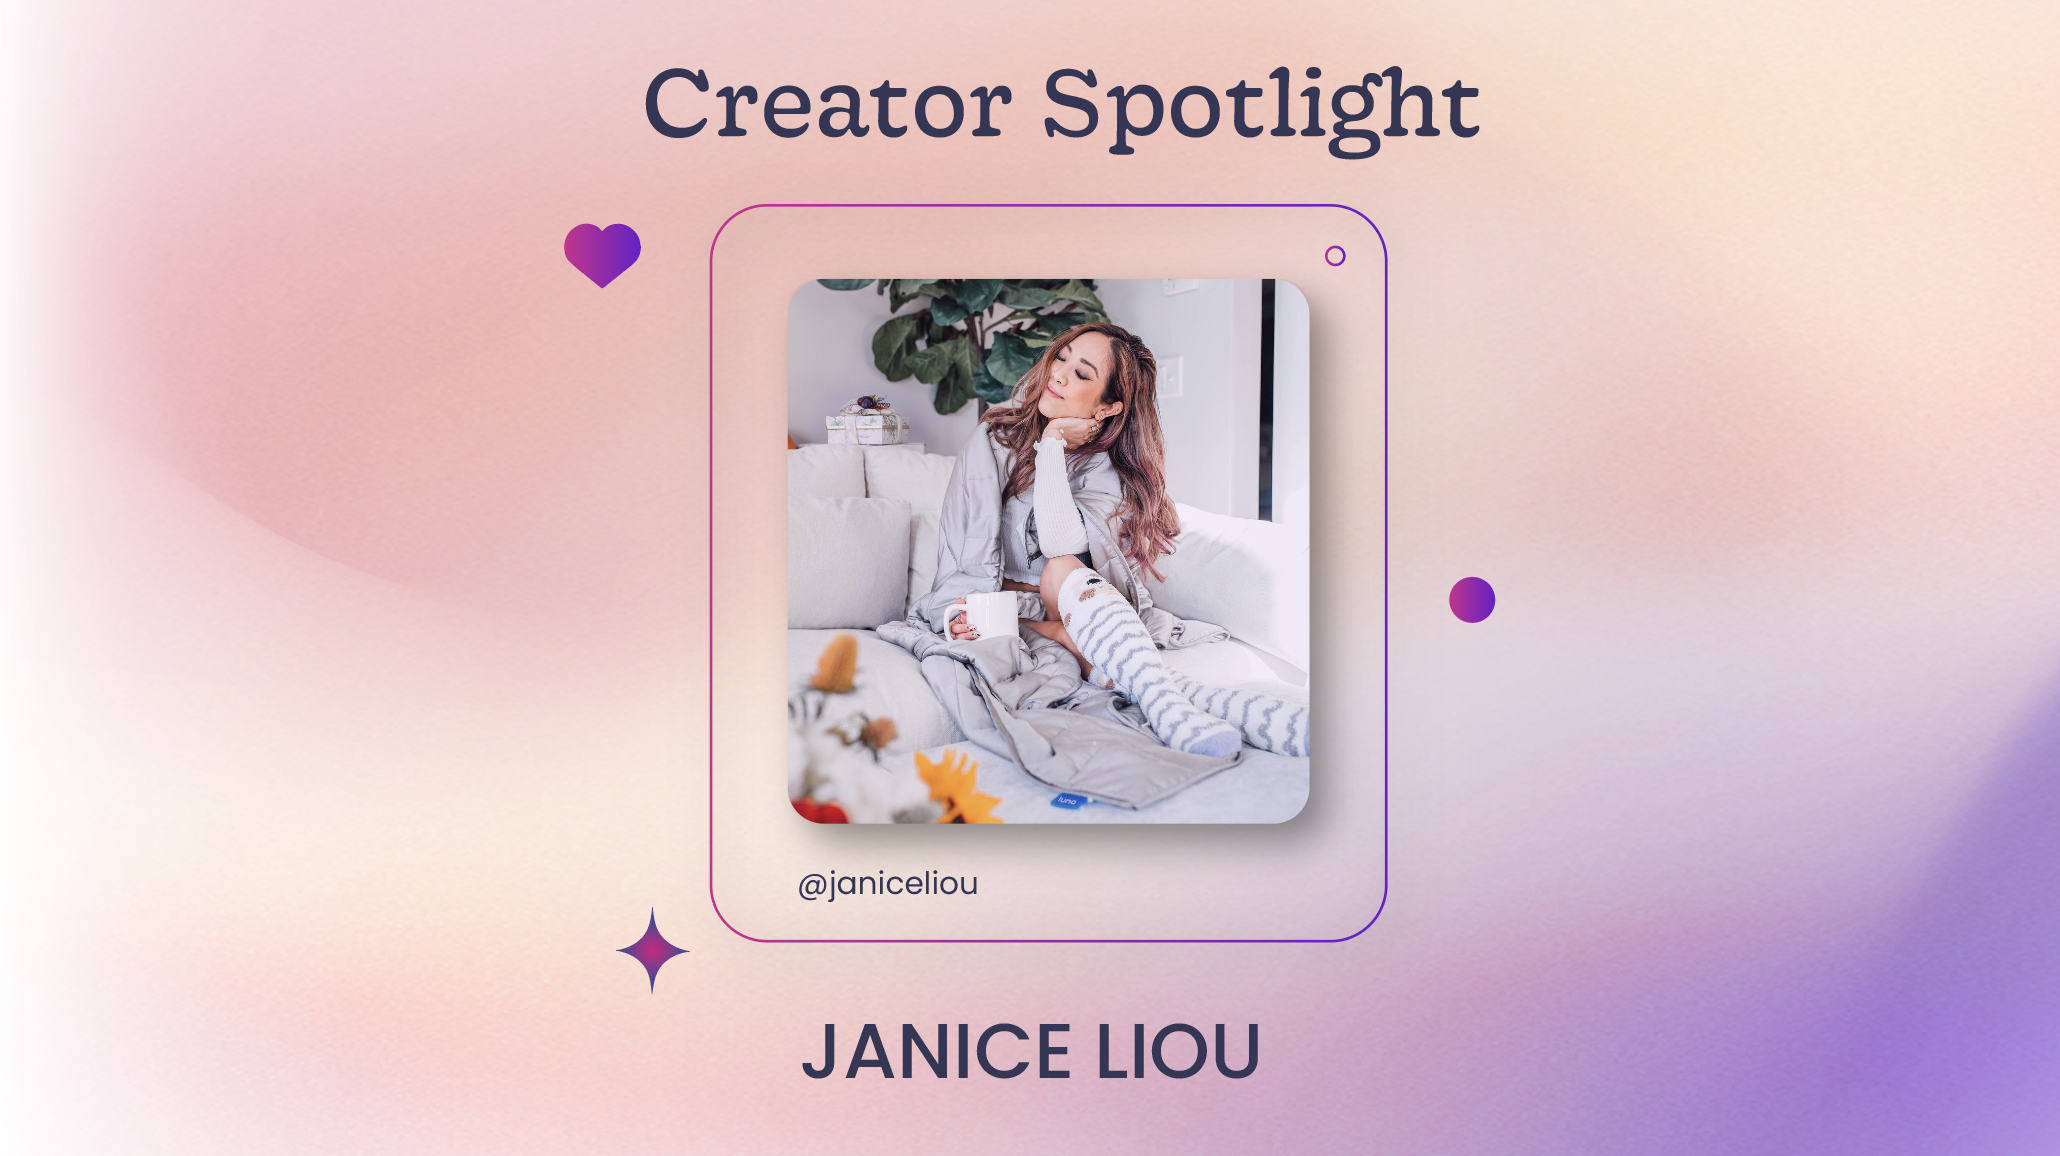 WOMAN CREATOR SPOTLIGHT: Meet Janice Liou